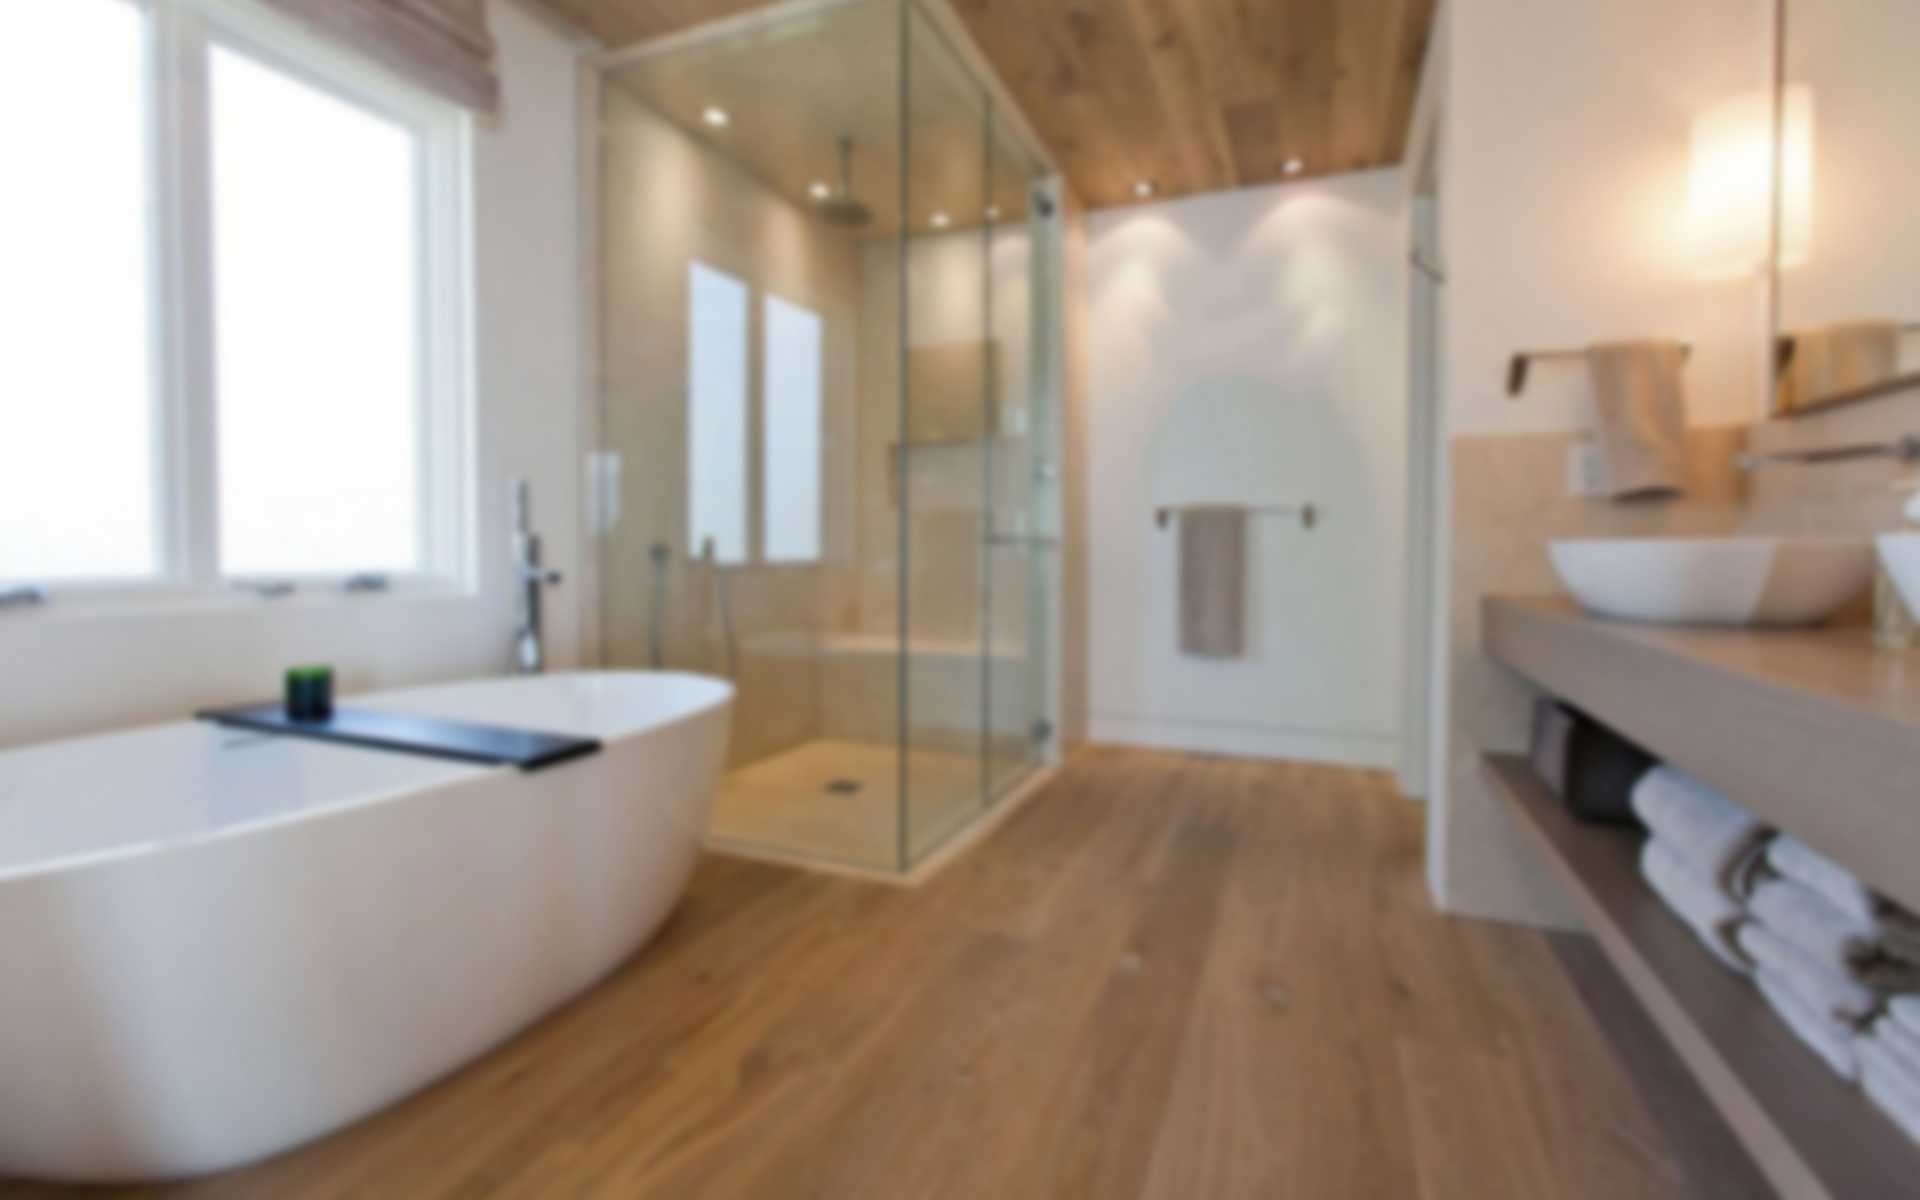 Bathroom Renovations Melbourne By Melbourne Bathroom Company